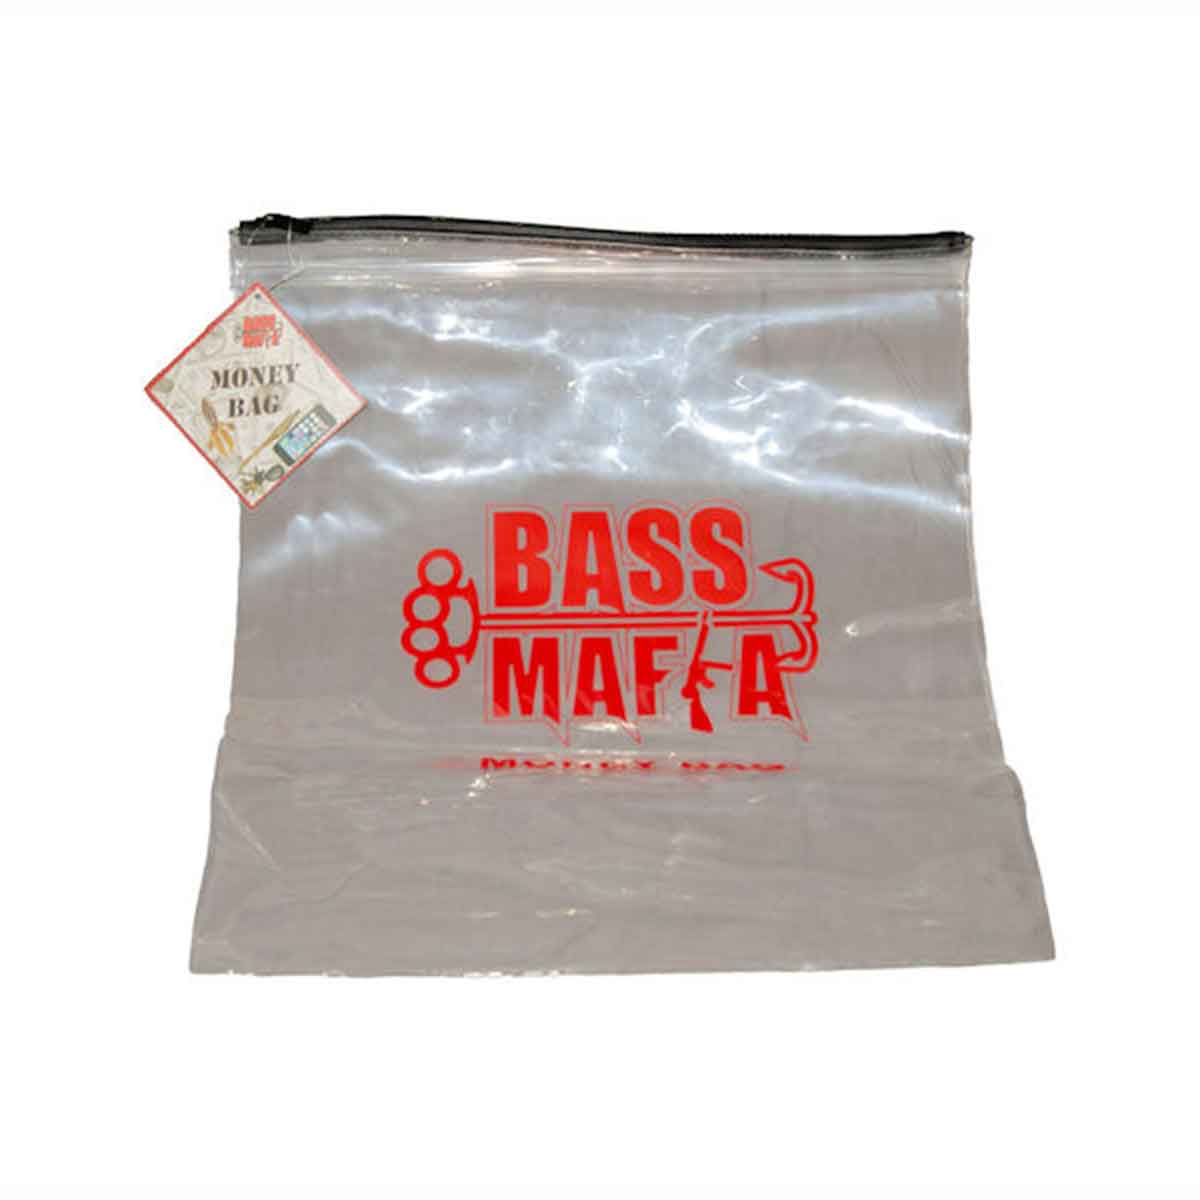 Bass Mafia Money Bag